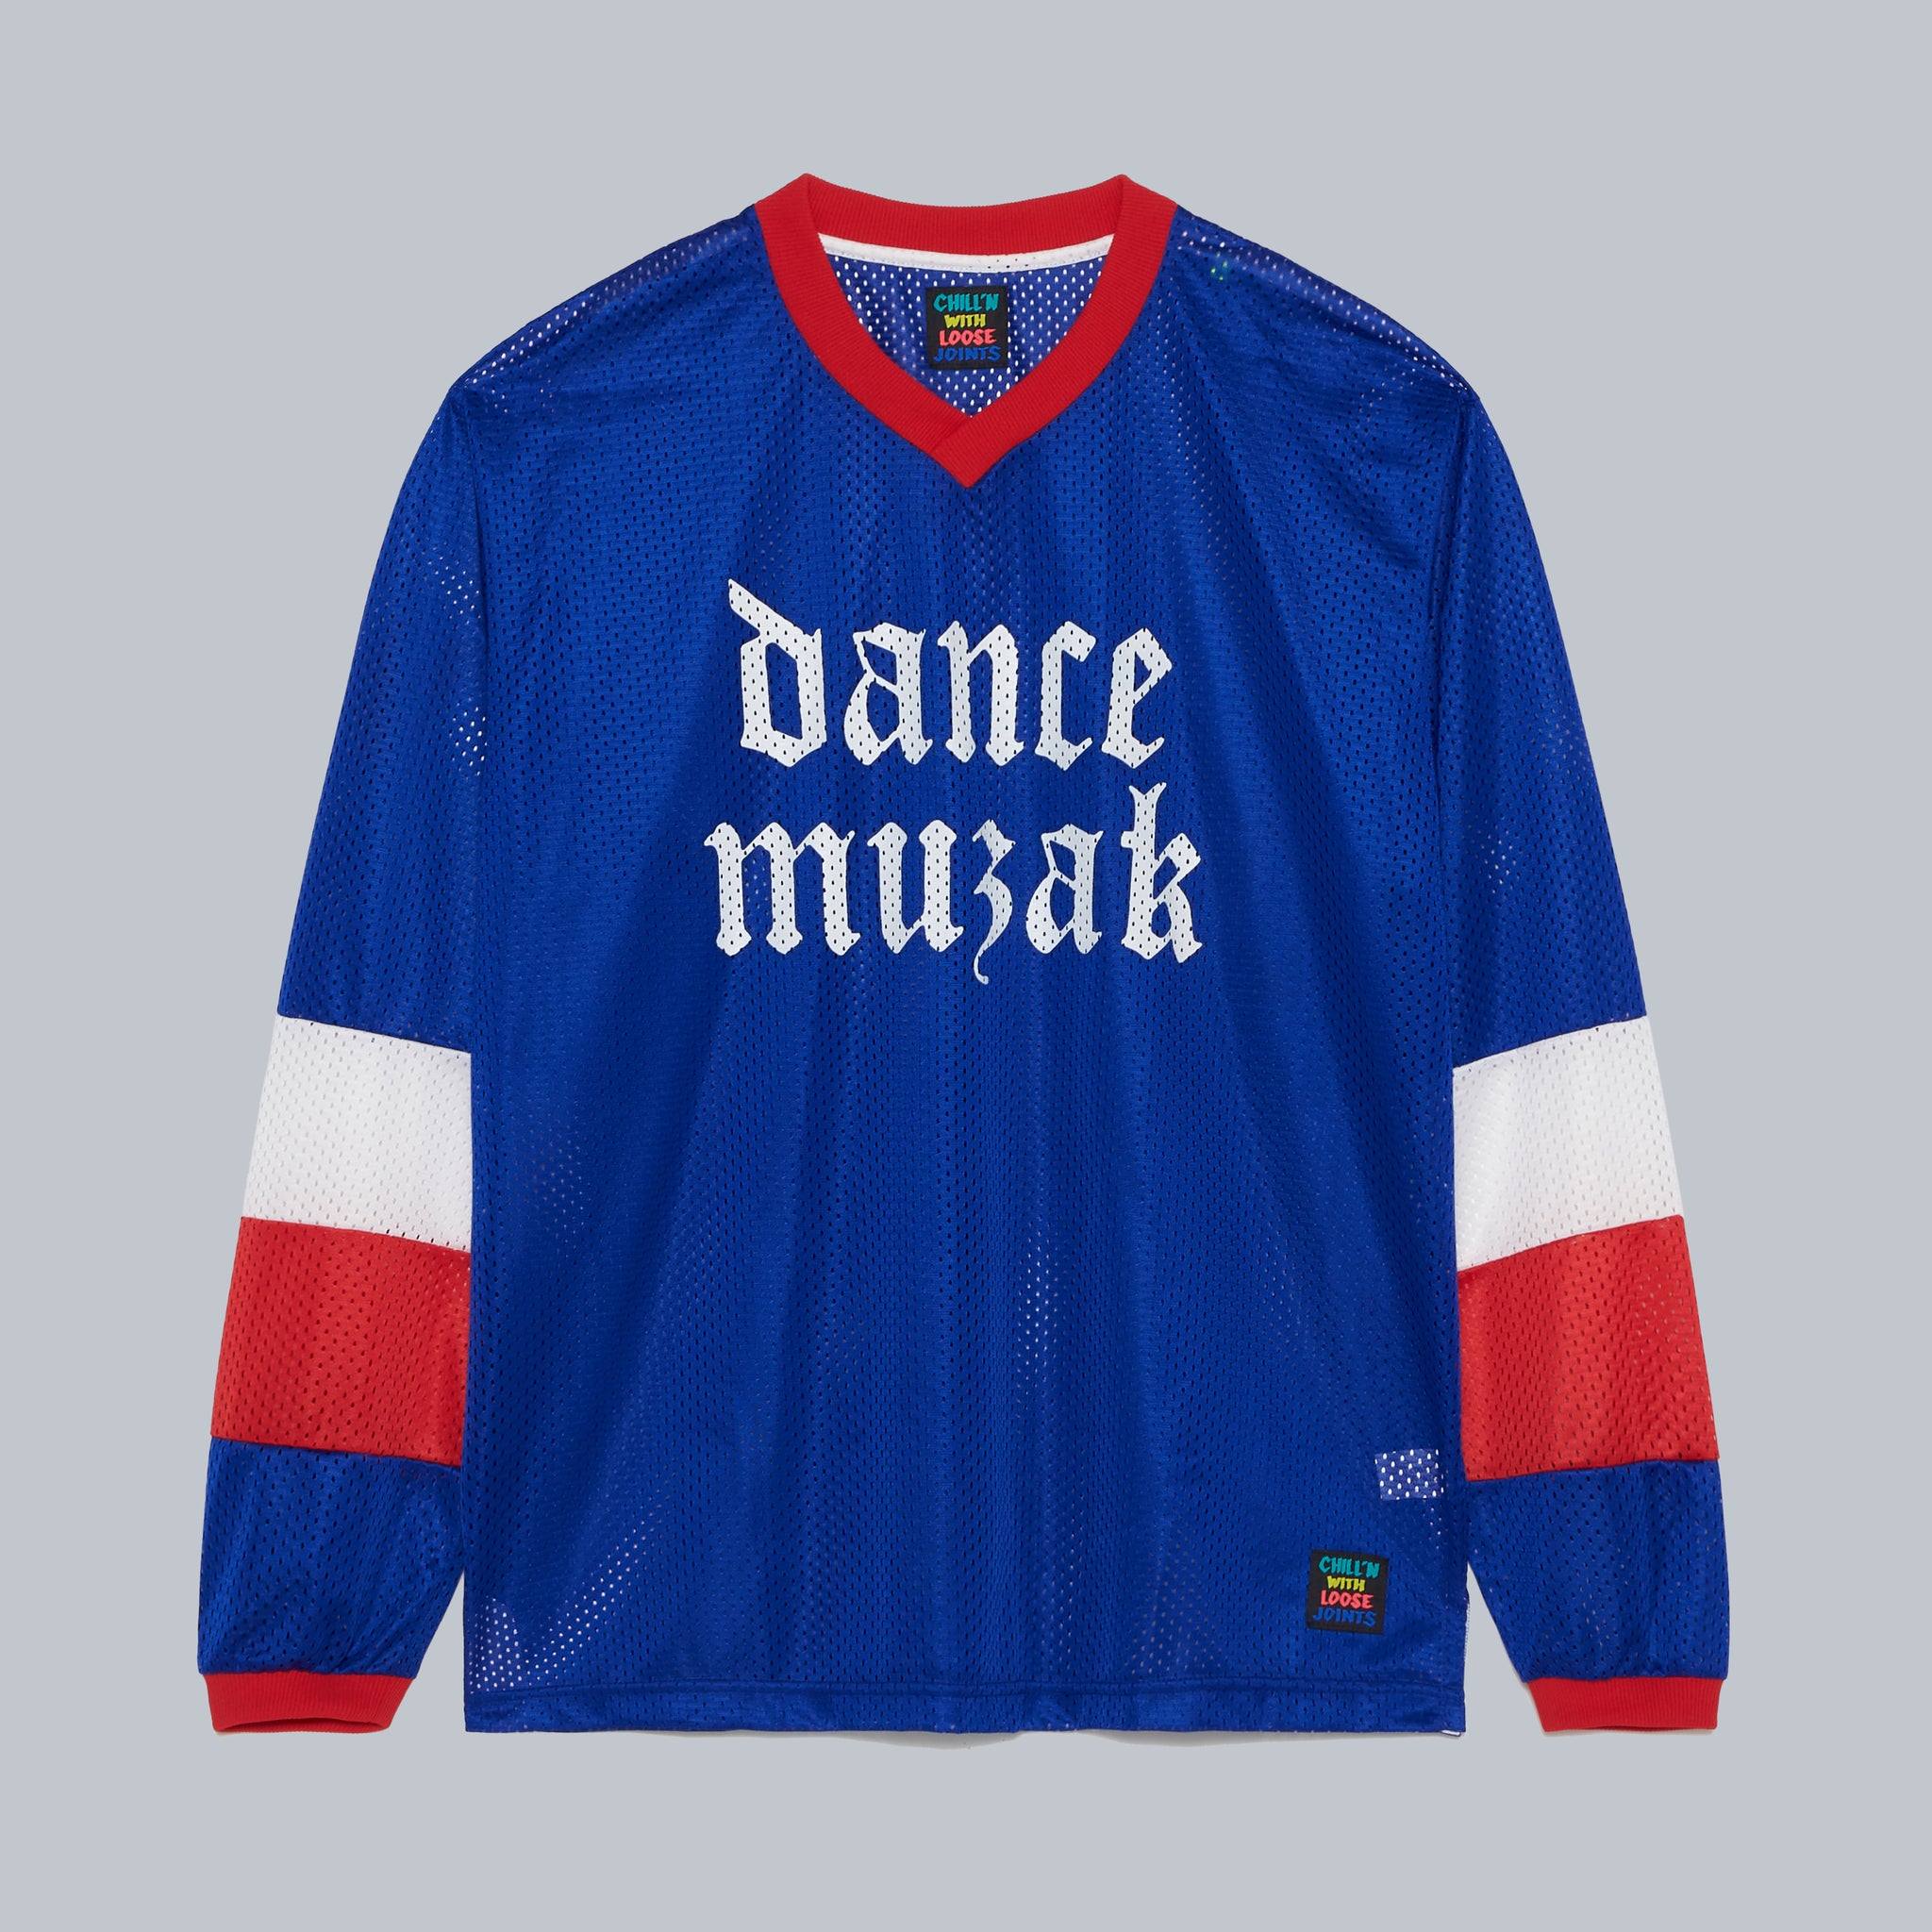 TOMOO GOKITA - 'dance muzak' CWL Mesh Shirt